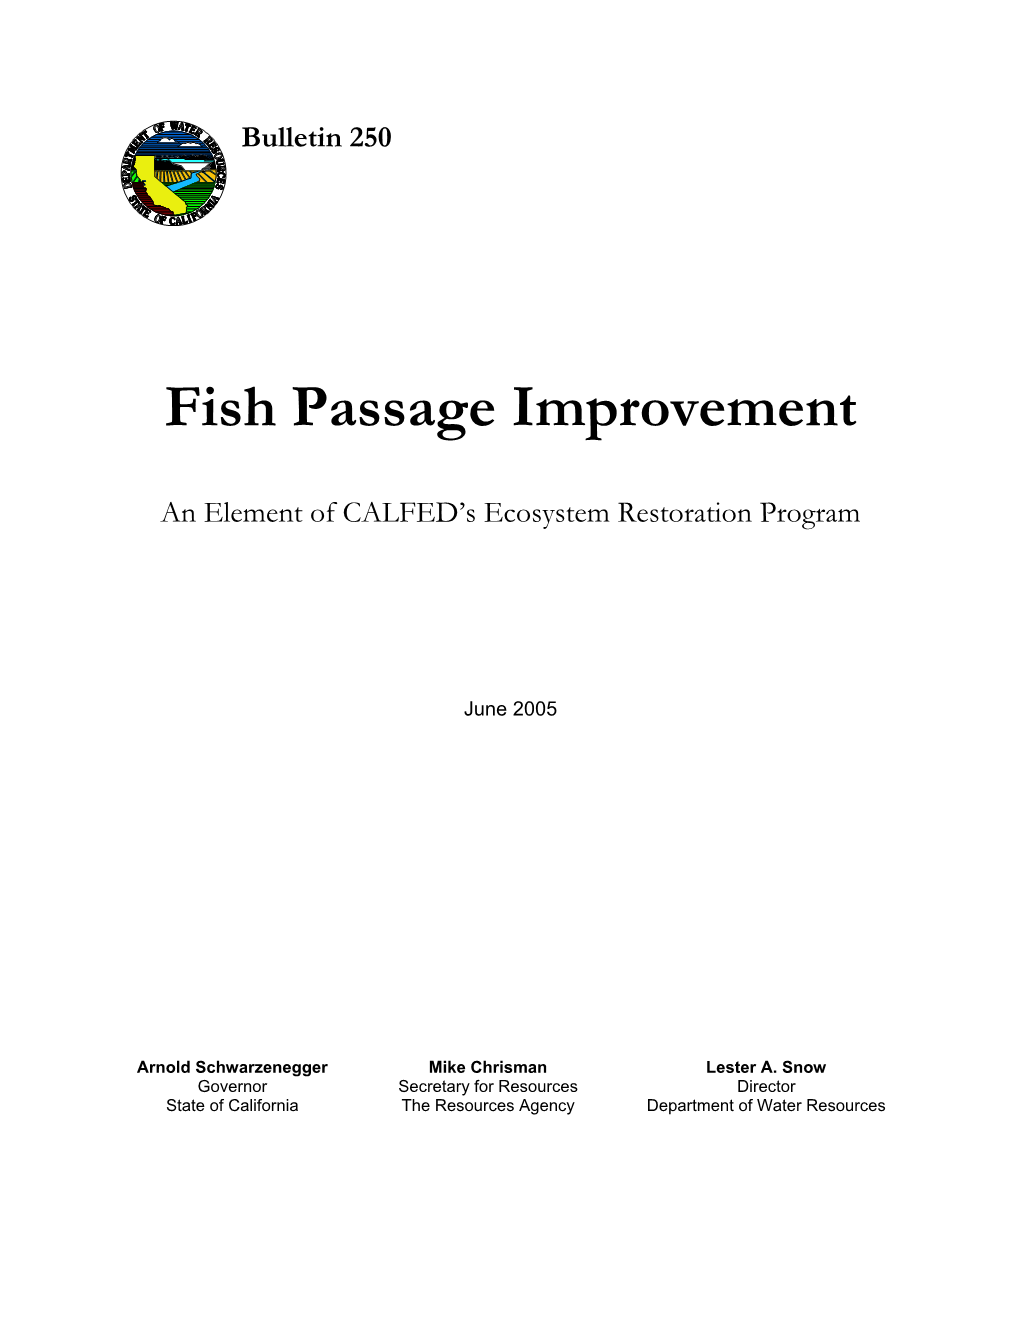 Fish Passage Improvement